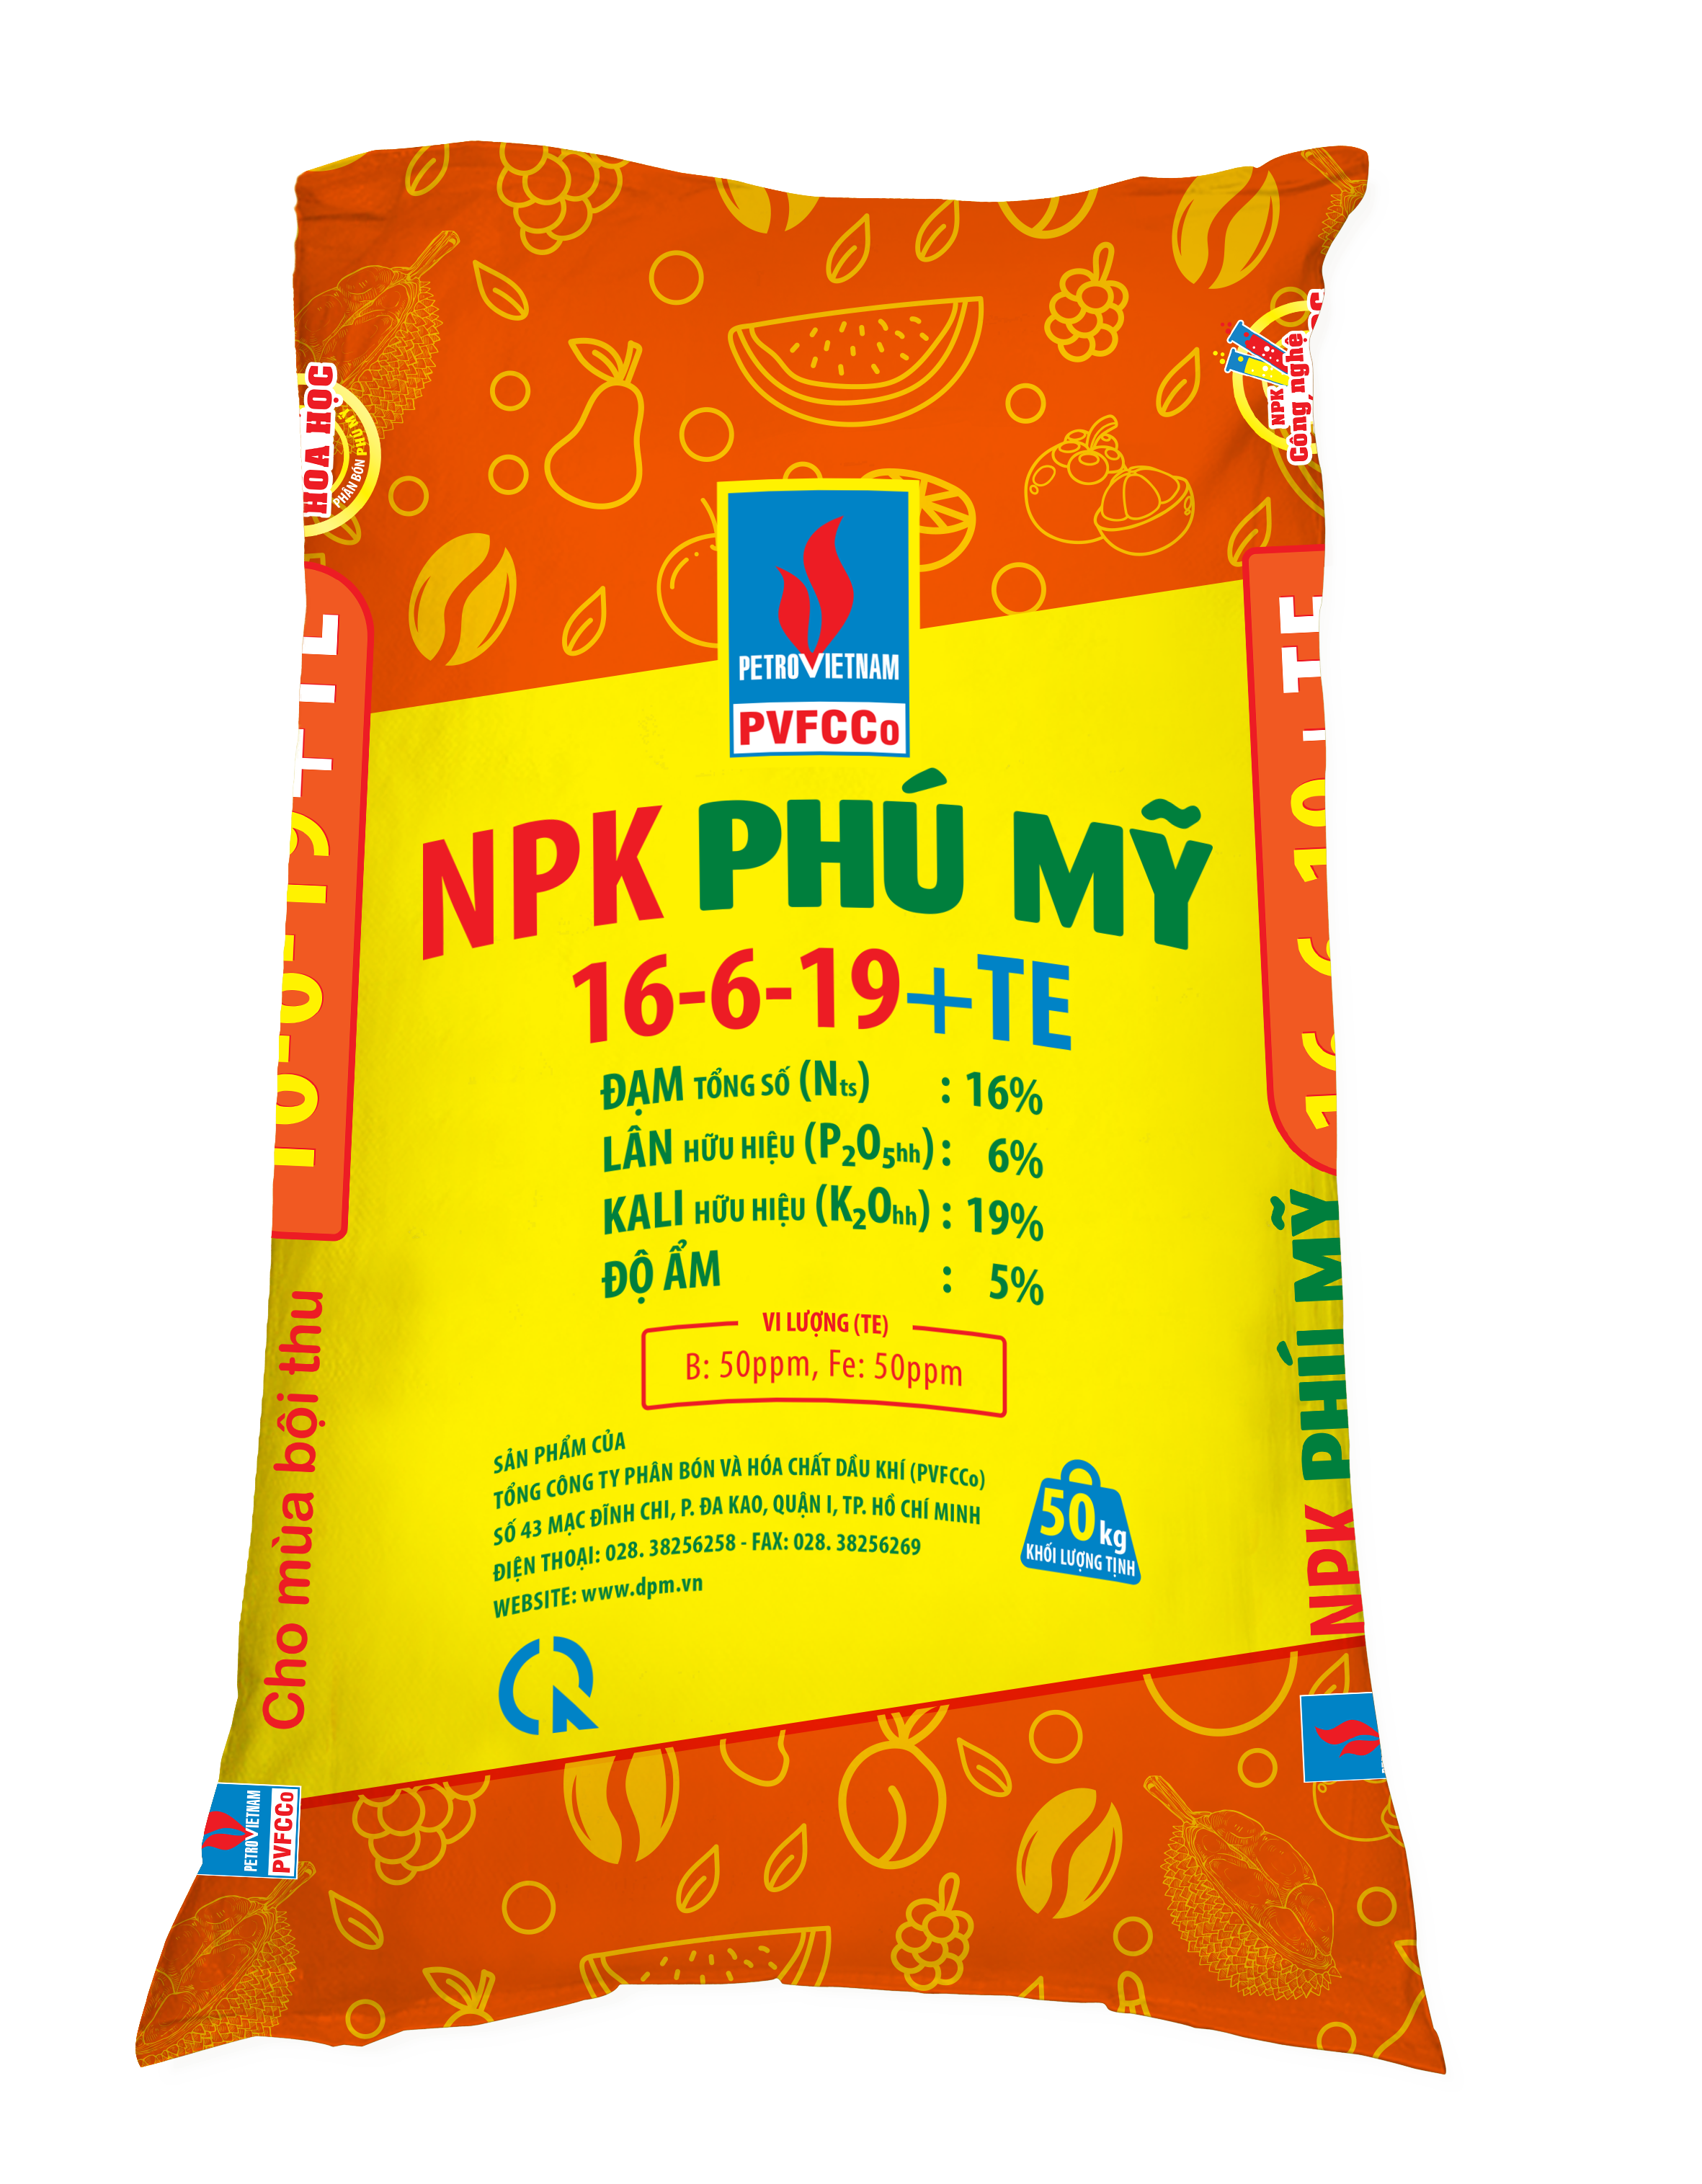 NPK Phu My 16-6-19+TE